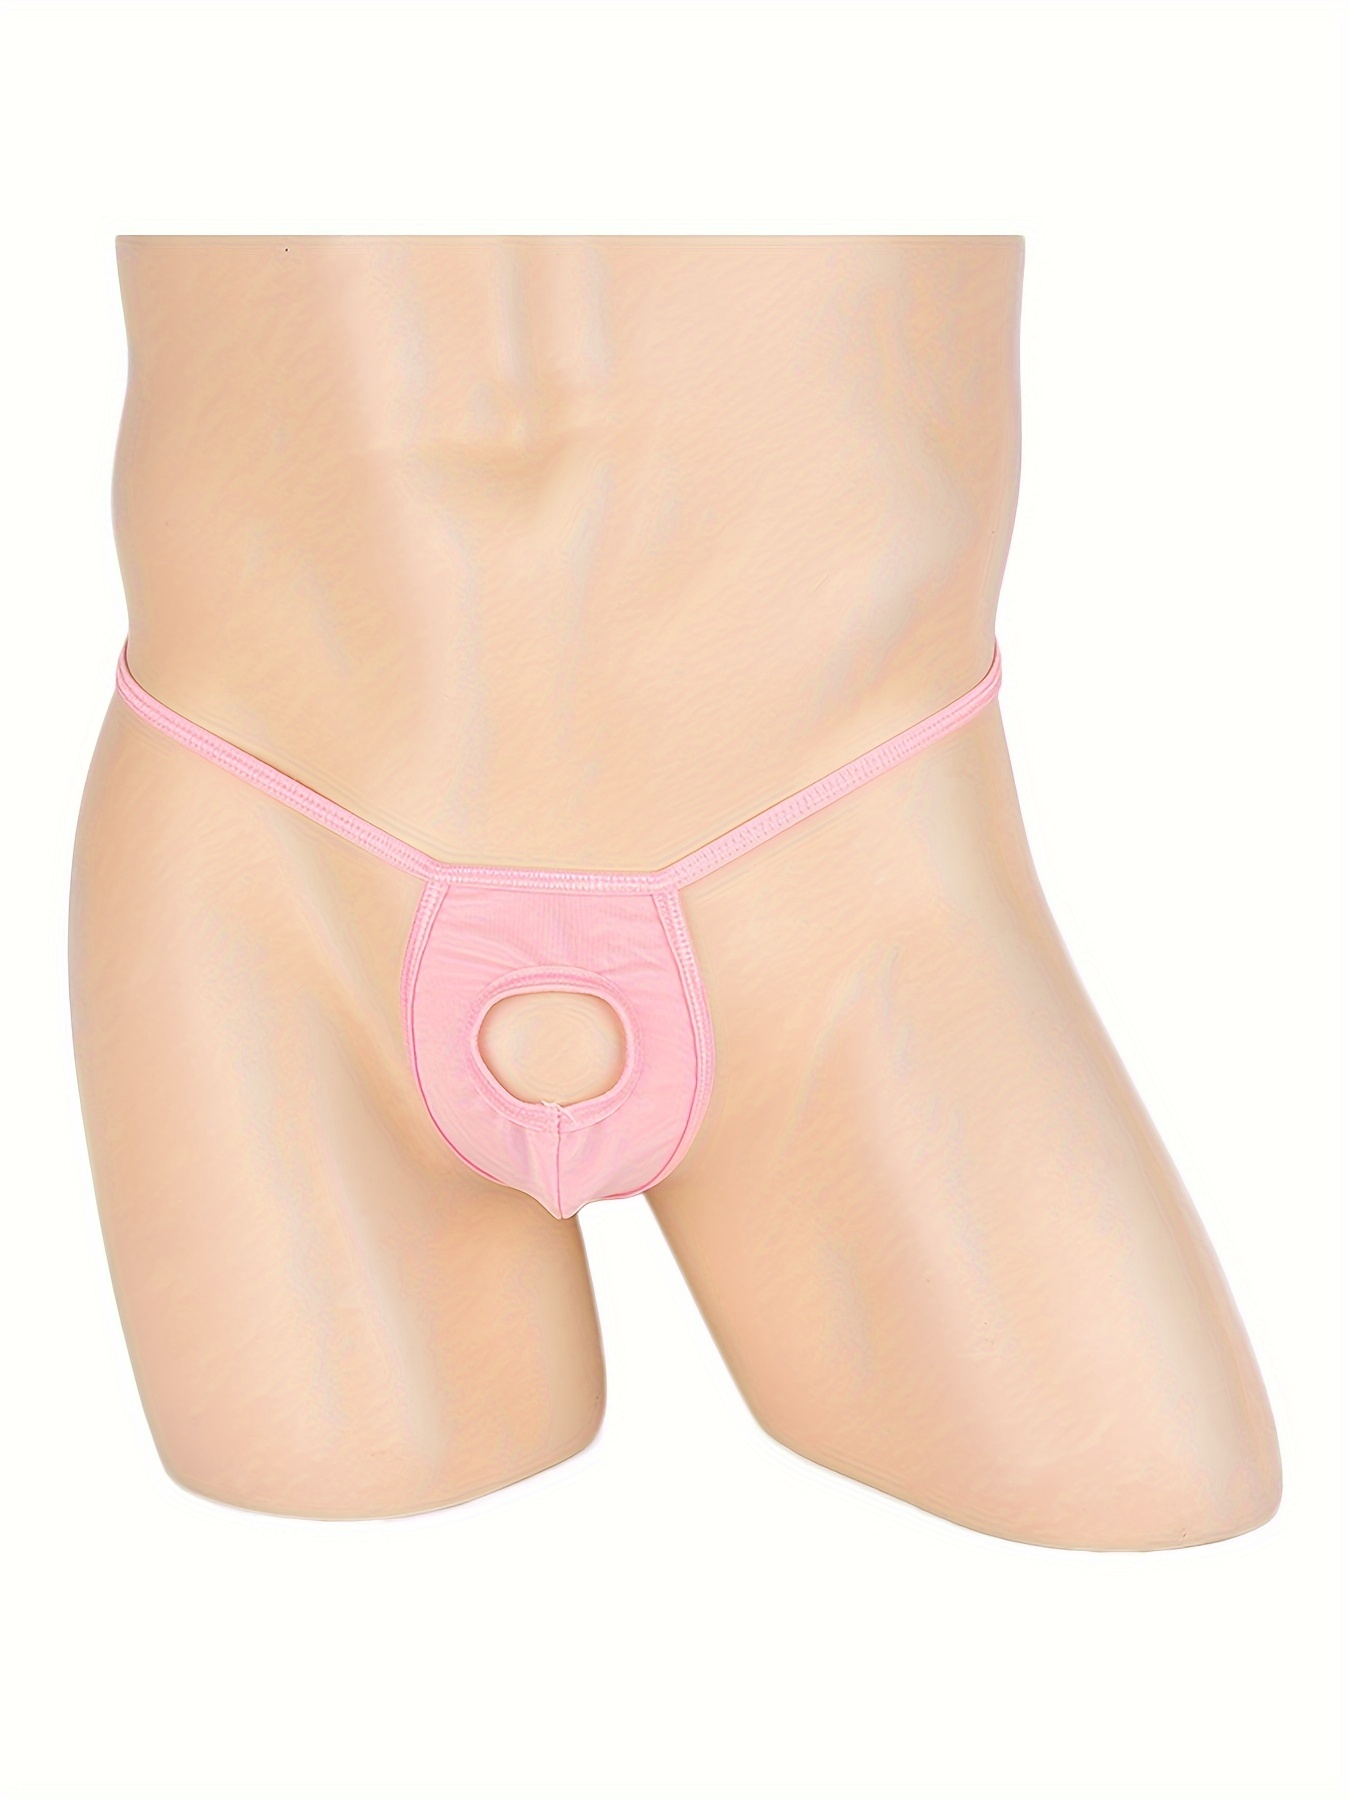 Men's Open Front Hole Briefs Thongs G-string Underwear T-back